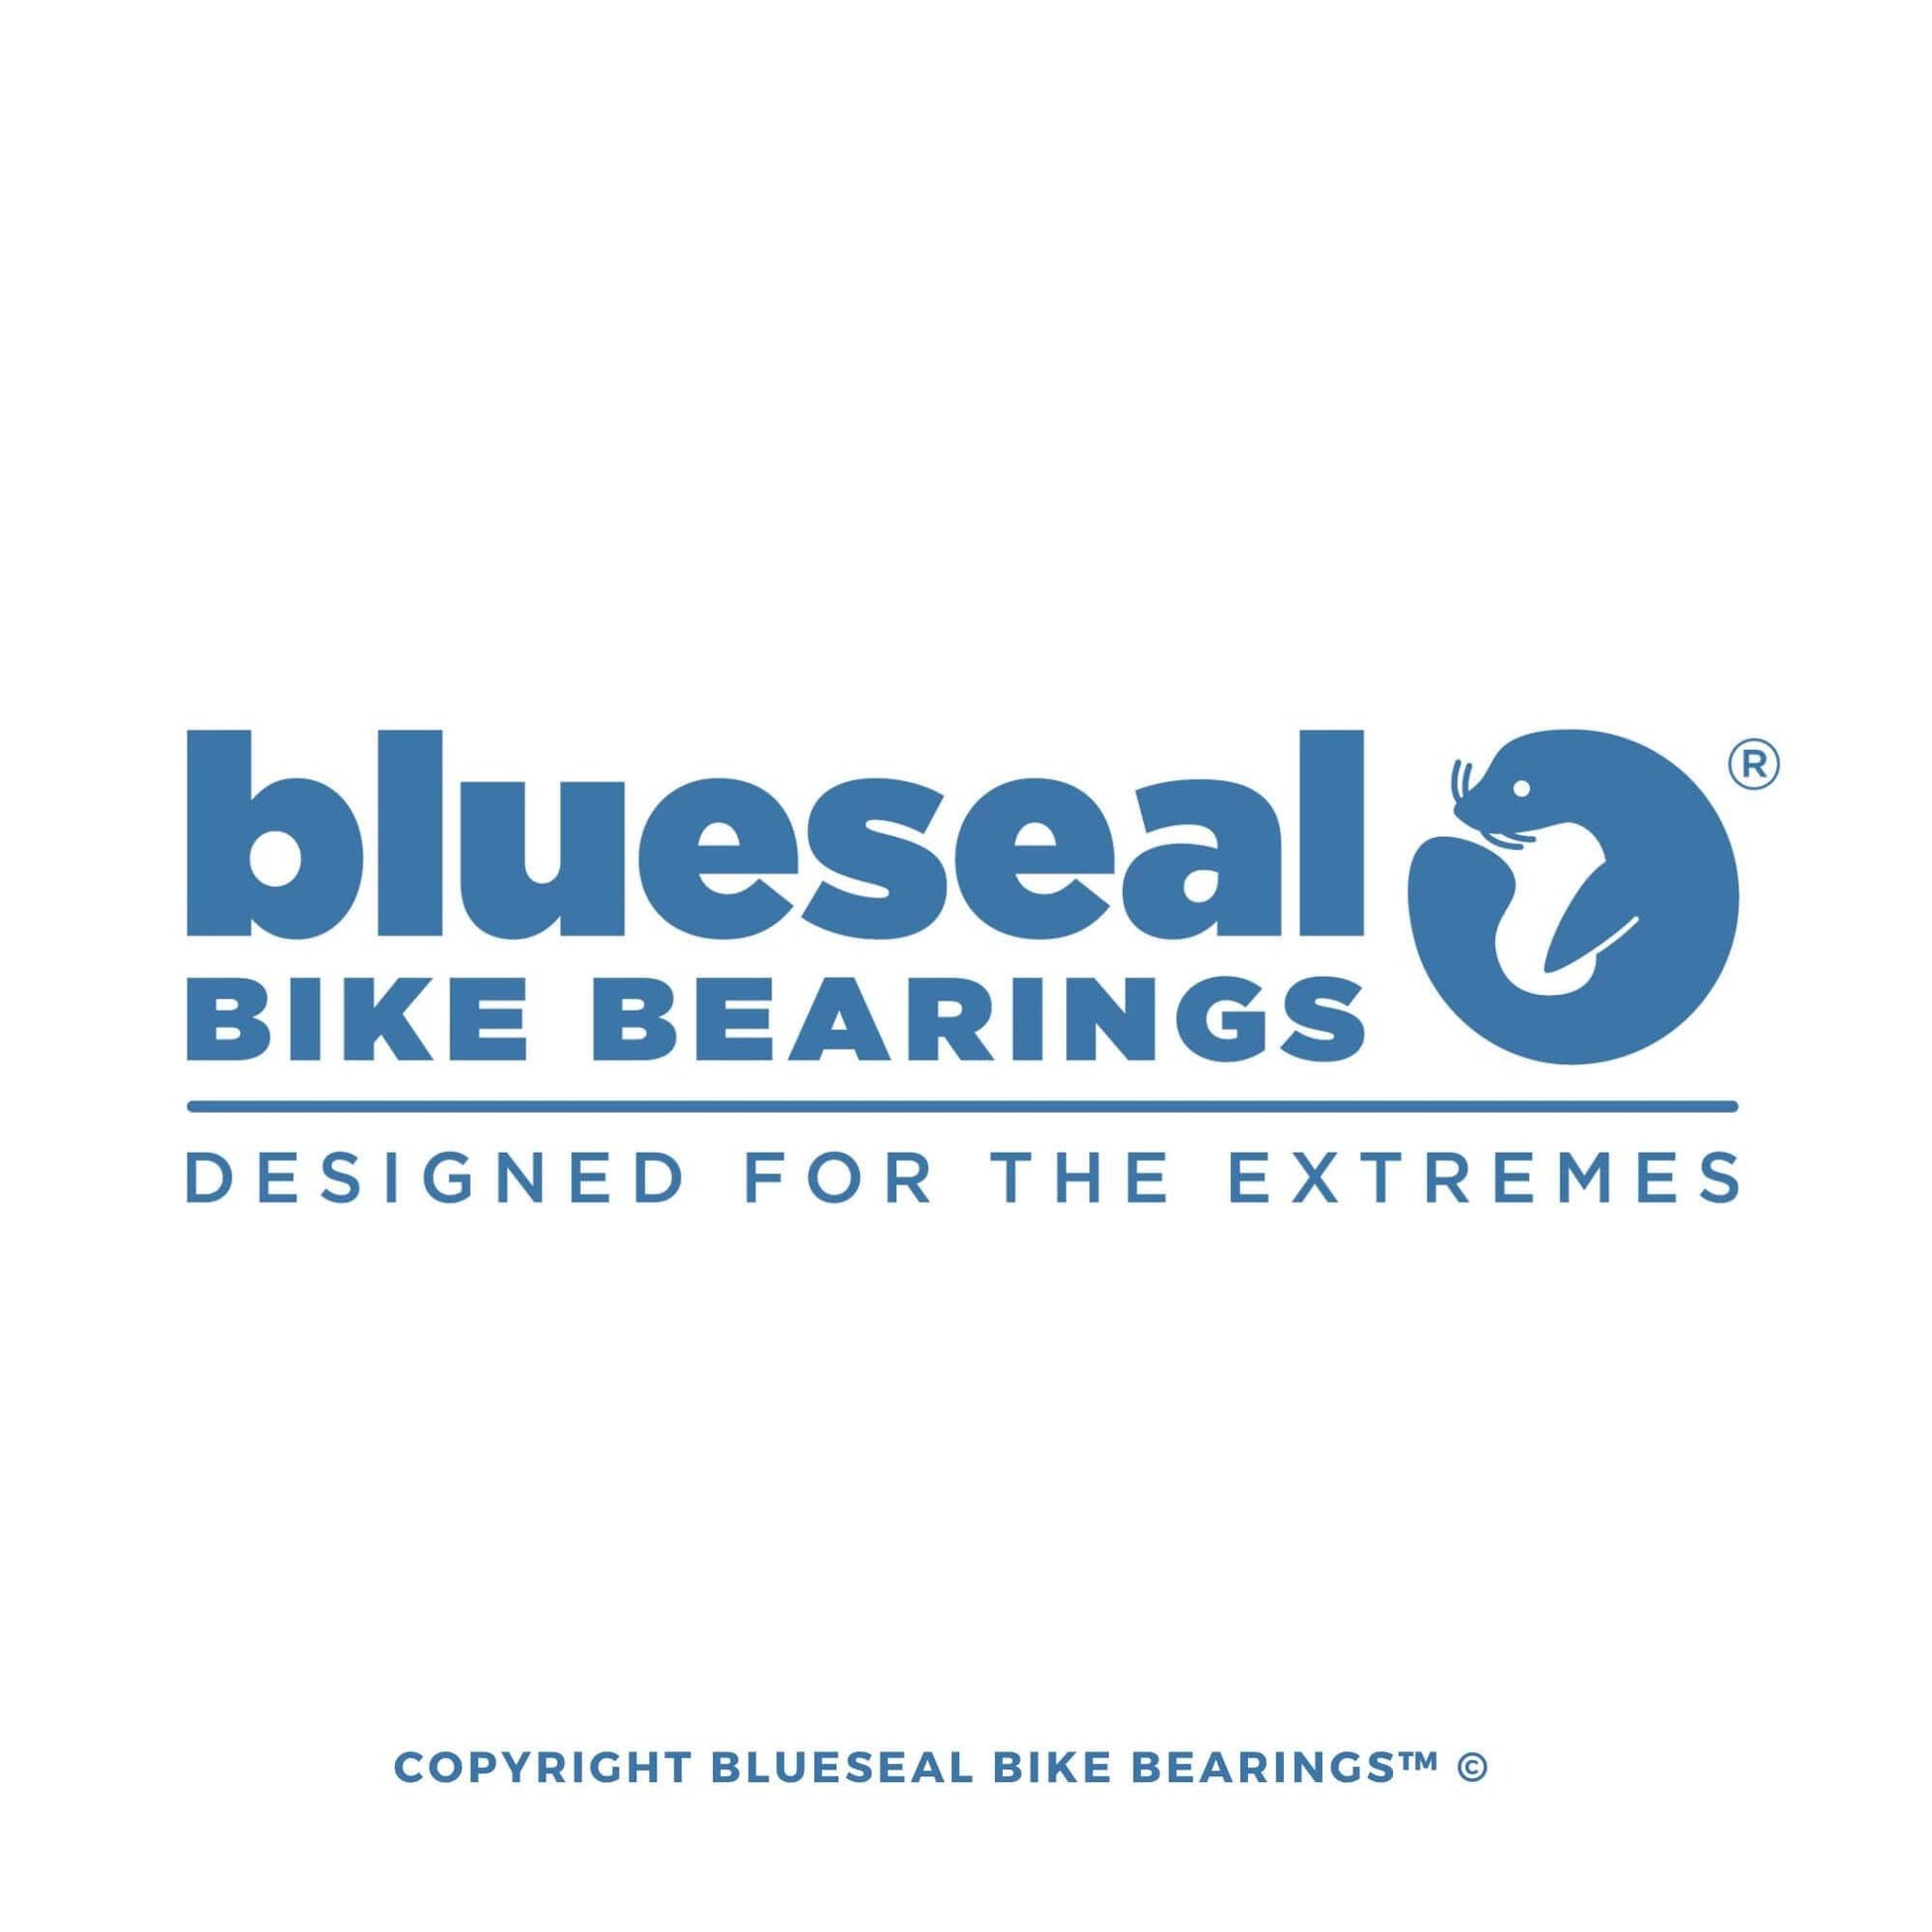 6802 MAX | 15 x 24 x 5mm | Blueseal Bike Bearings™ - Trailvision - Bicycle Bearing Suppliers